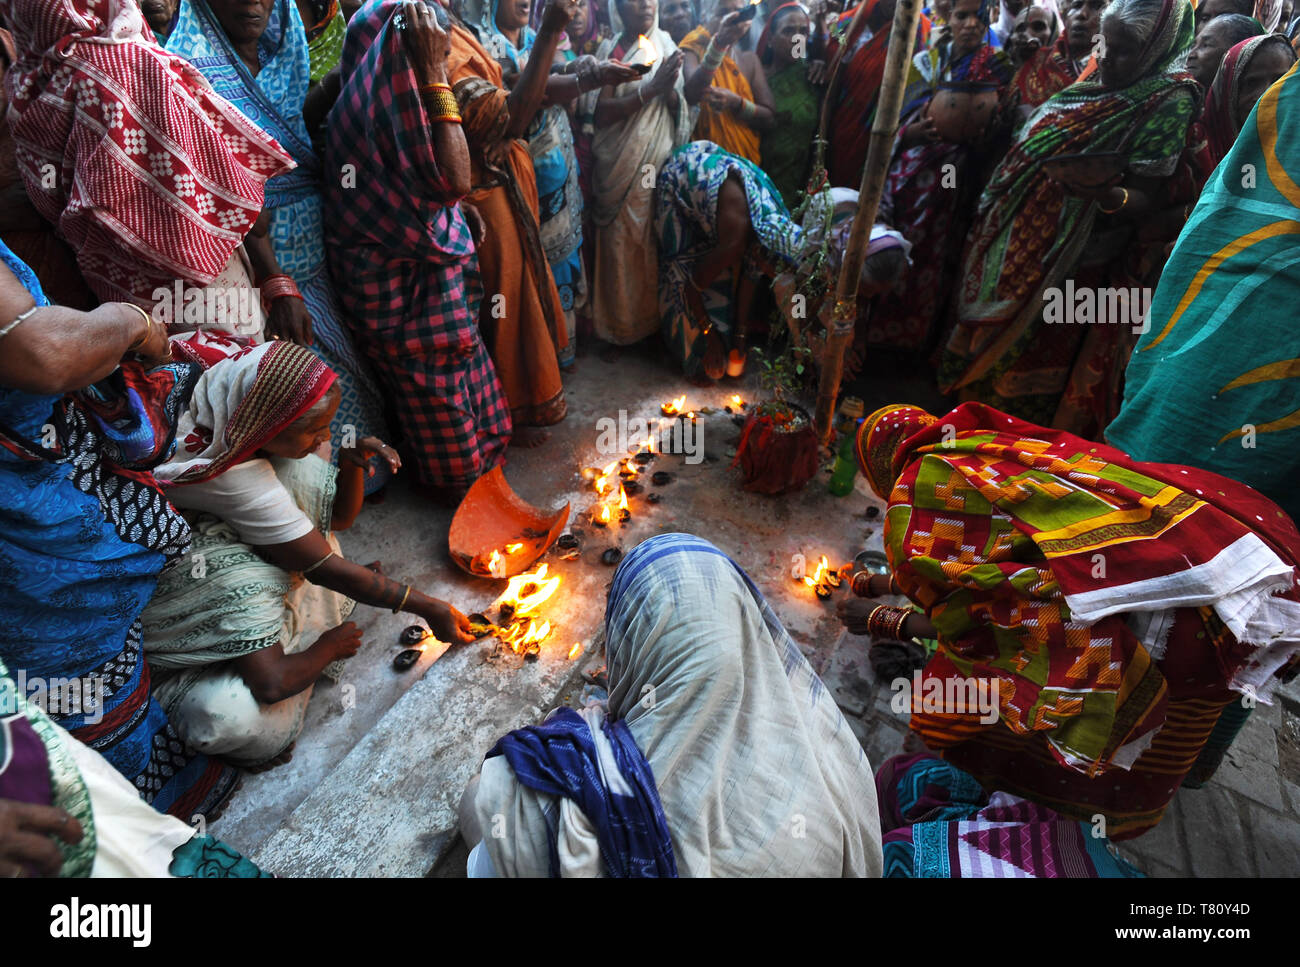 Las viudas se reunieron para celebrar Kartika Brata mes largo festival por ayunar juntos y quemando puya lámparas, Puri, Odisha, India, Asia Foto de stock